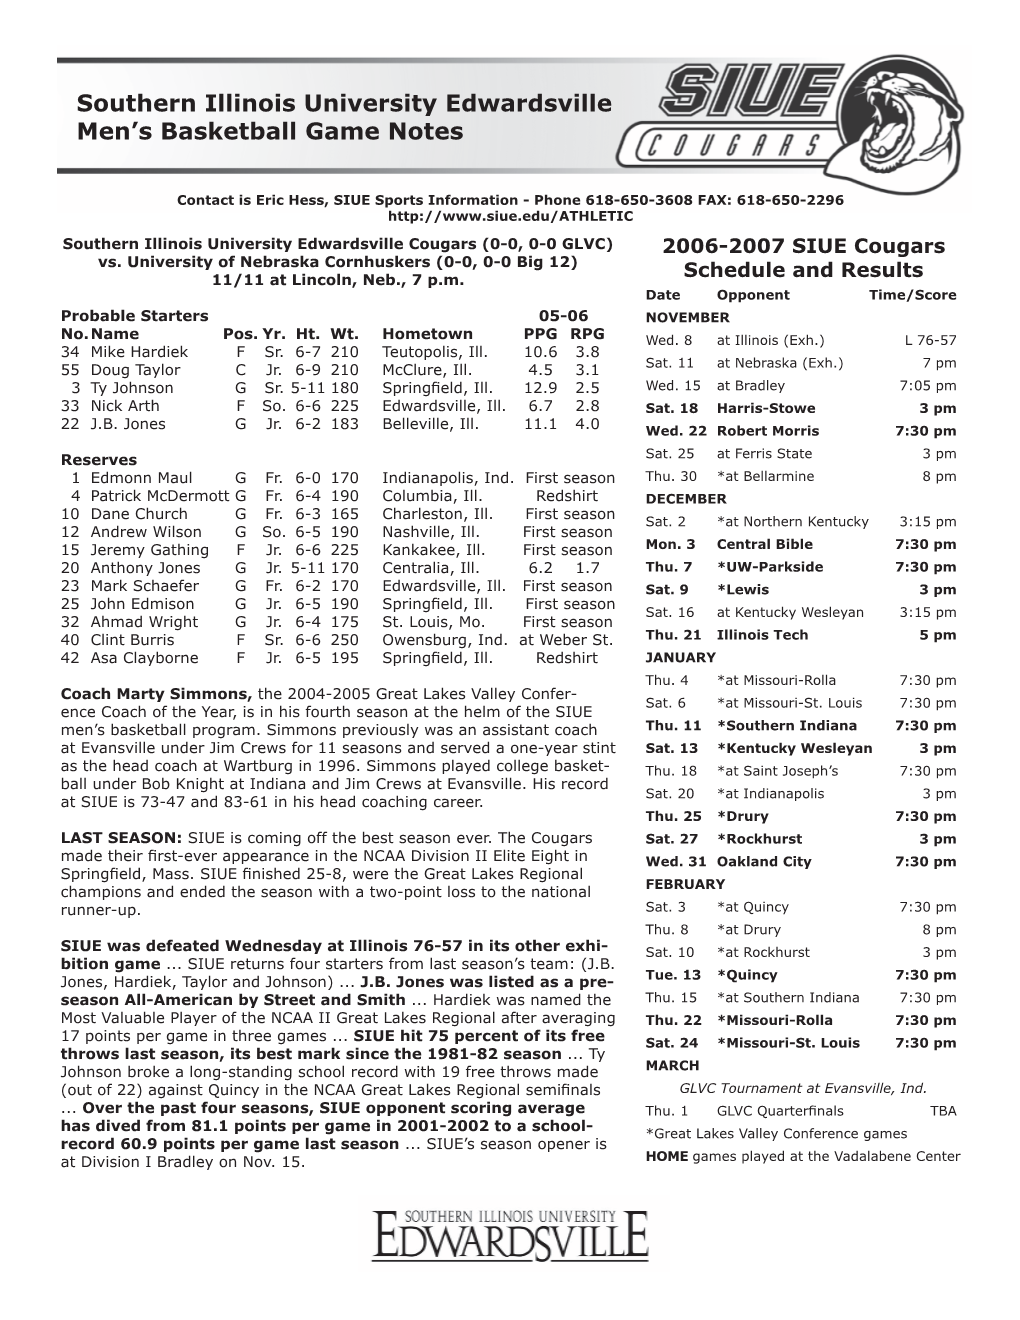 Southern Illinois University Edwardsville Men's Basketball Game Notes